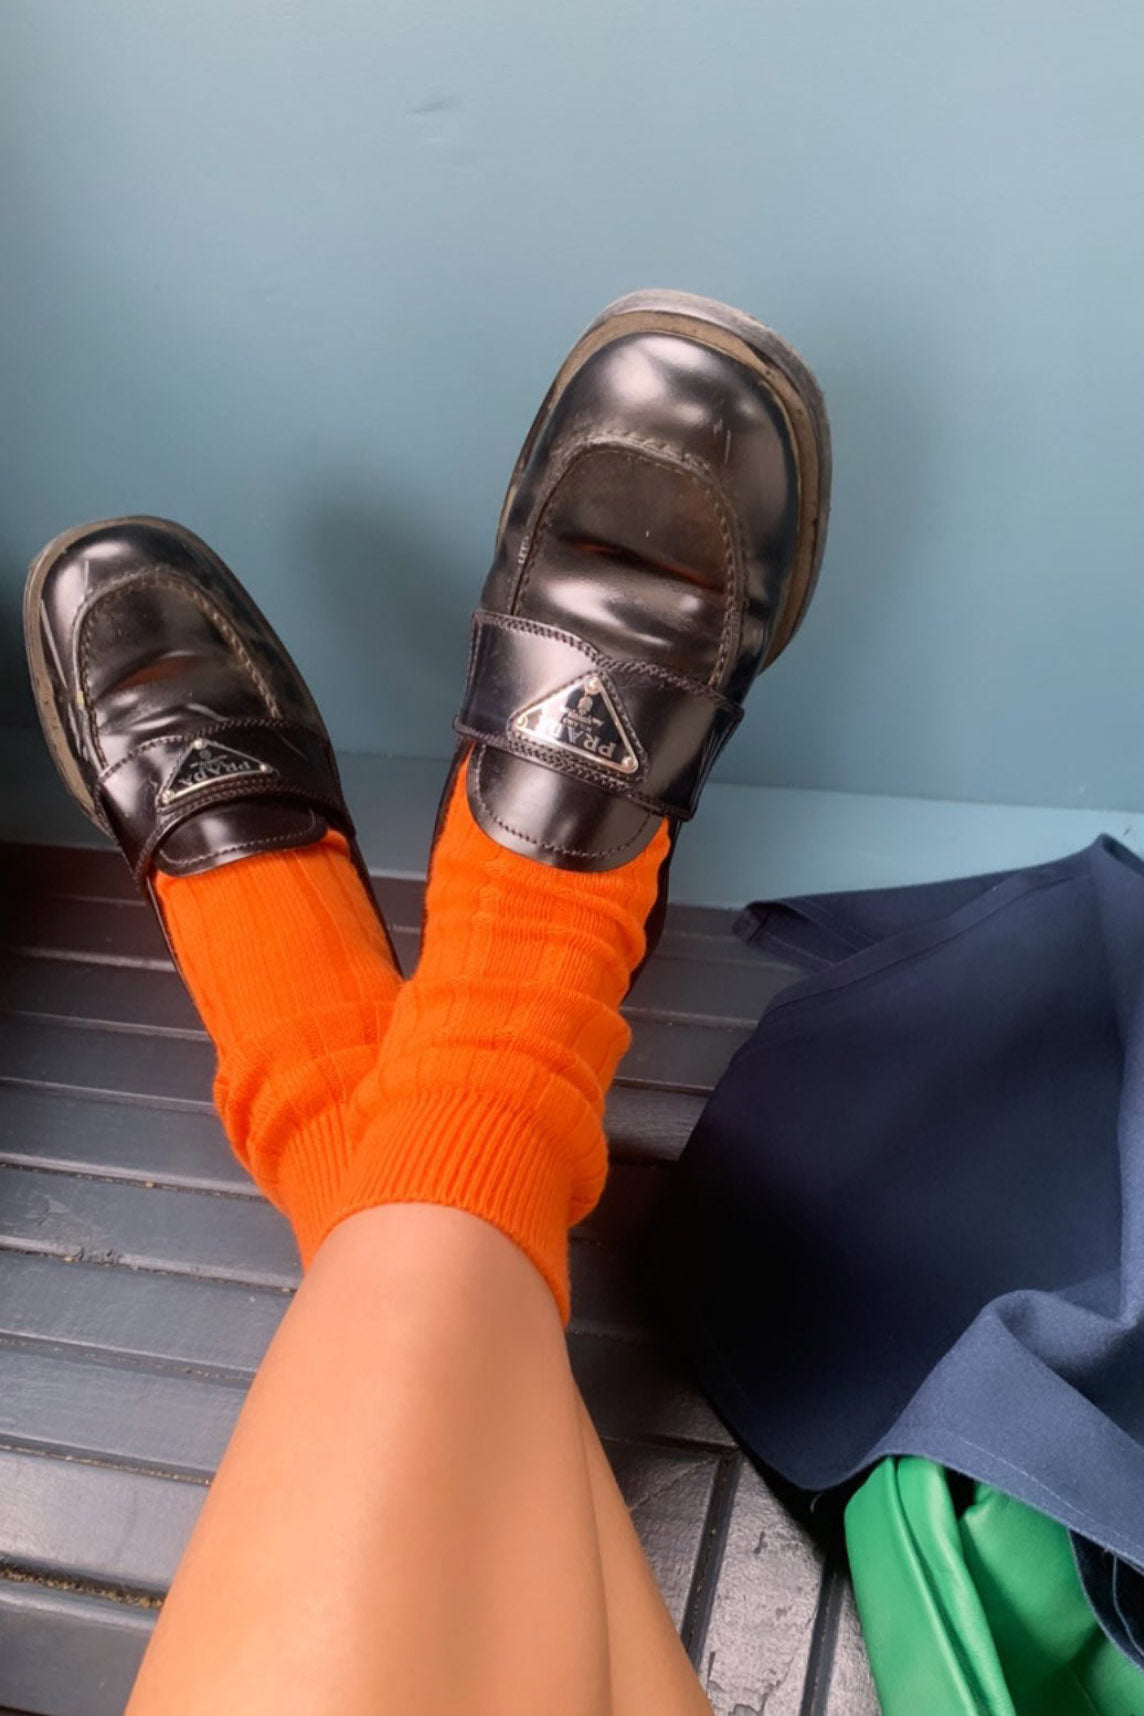 The Danielle Sock in Tangerine with Black Prada loafers